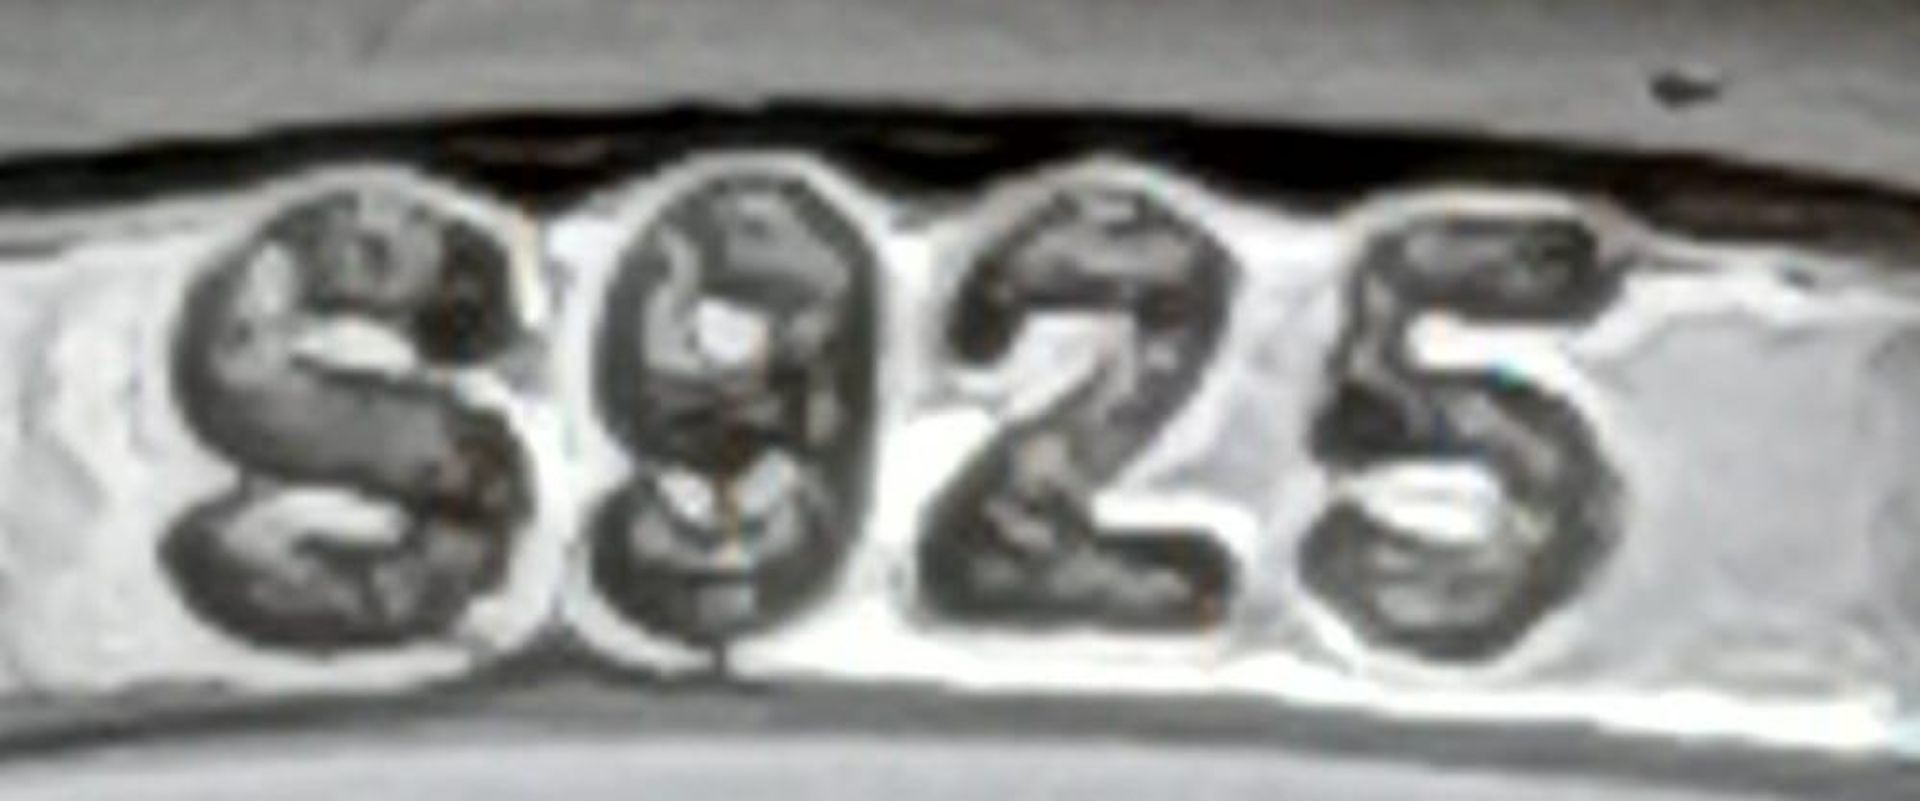 Pair of 925 Silver, Pearl Earrings. Drop measures 1cm. Weight: 1.40g - Image 4 of 4